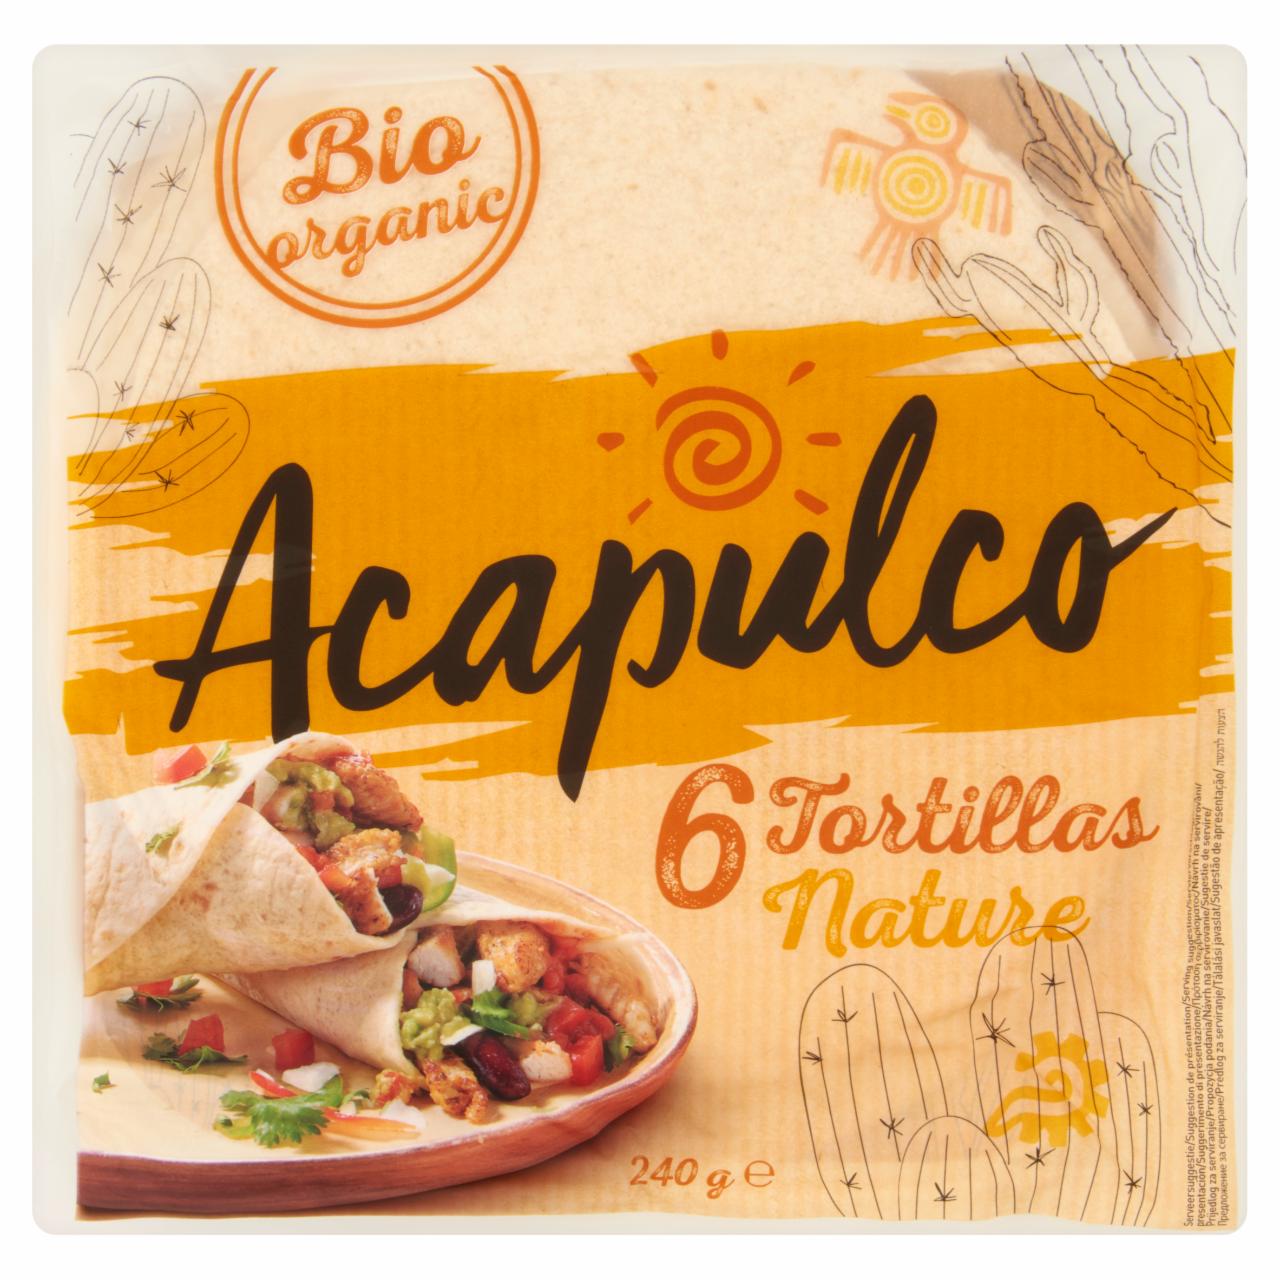 Képek - Poco Loco Acapulco BIO lágy tortilla lapok búzalisztből 6 db 240 g